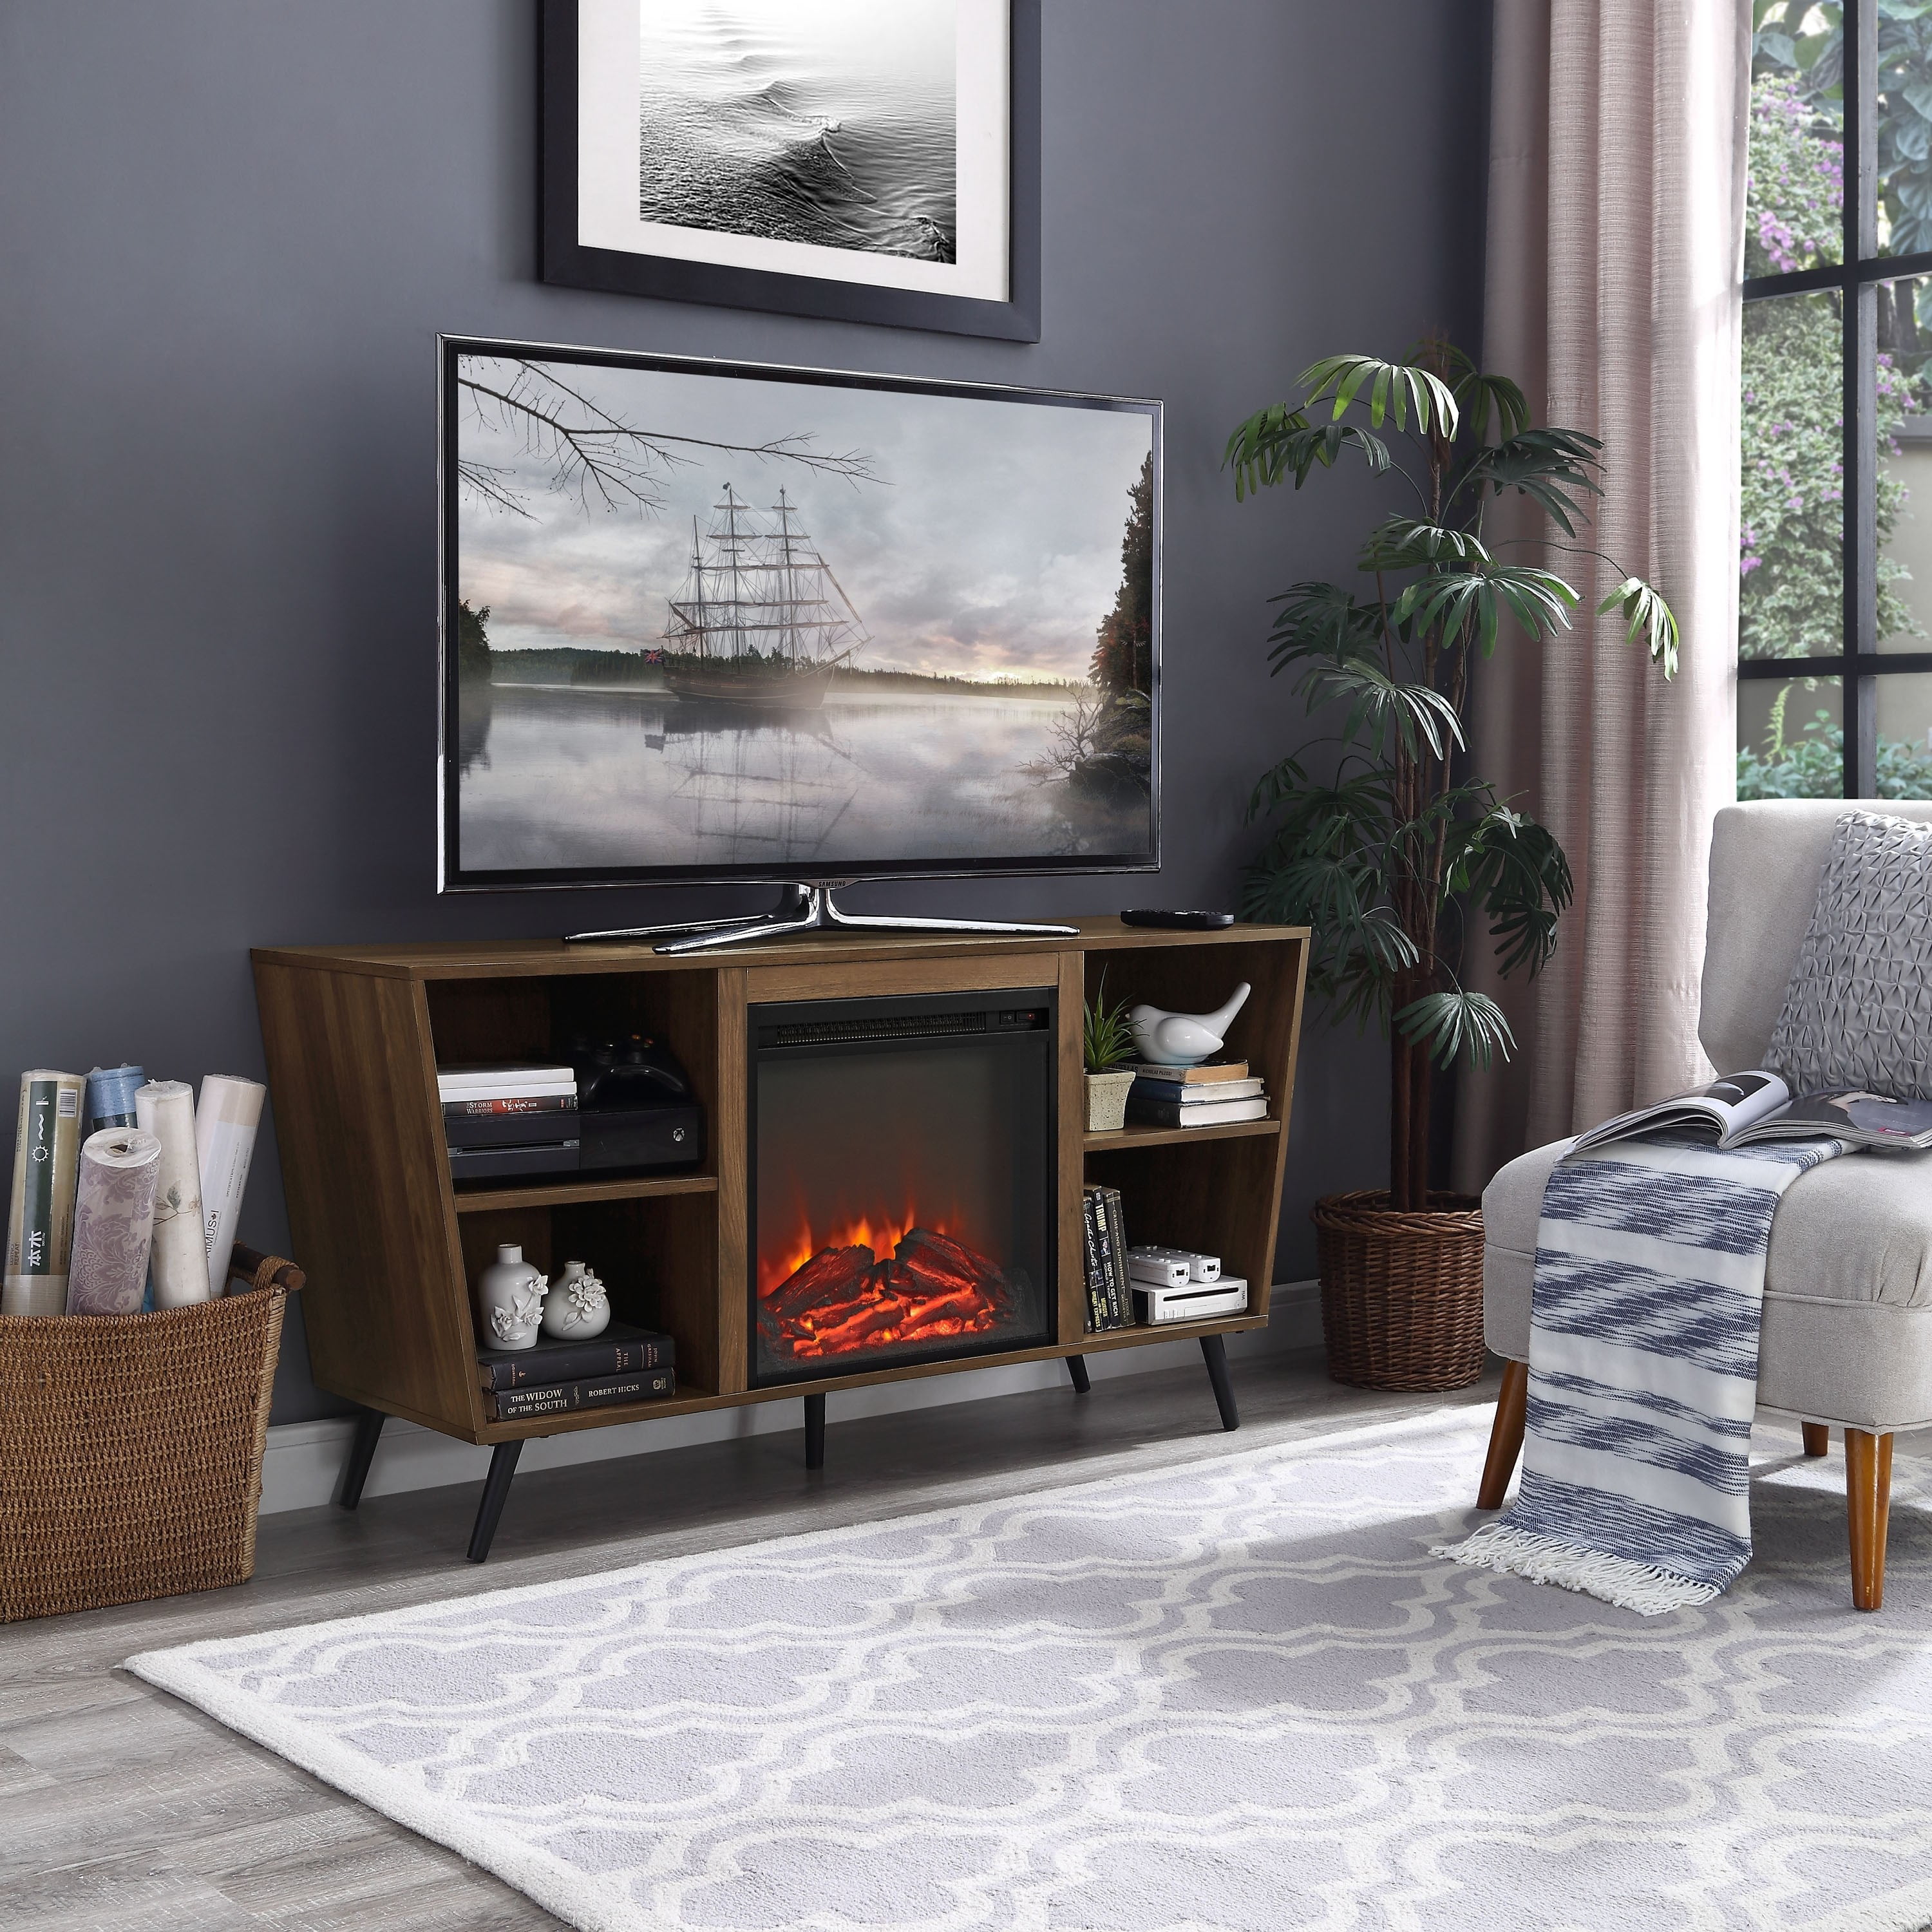 Mid-Century Modern 52-inch Angled Side Fireplace TV Stand - Walmart.com